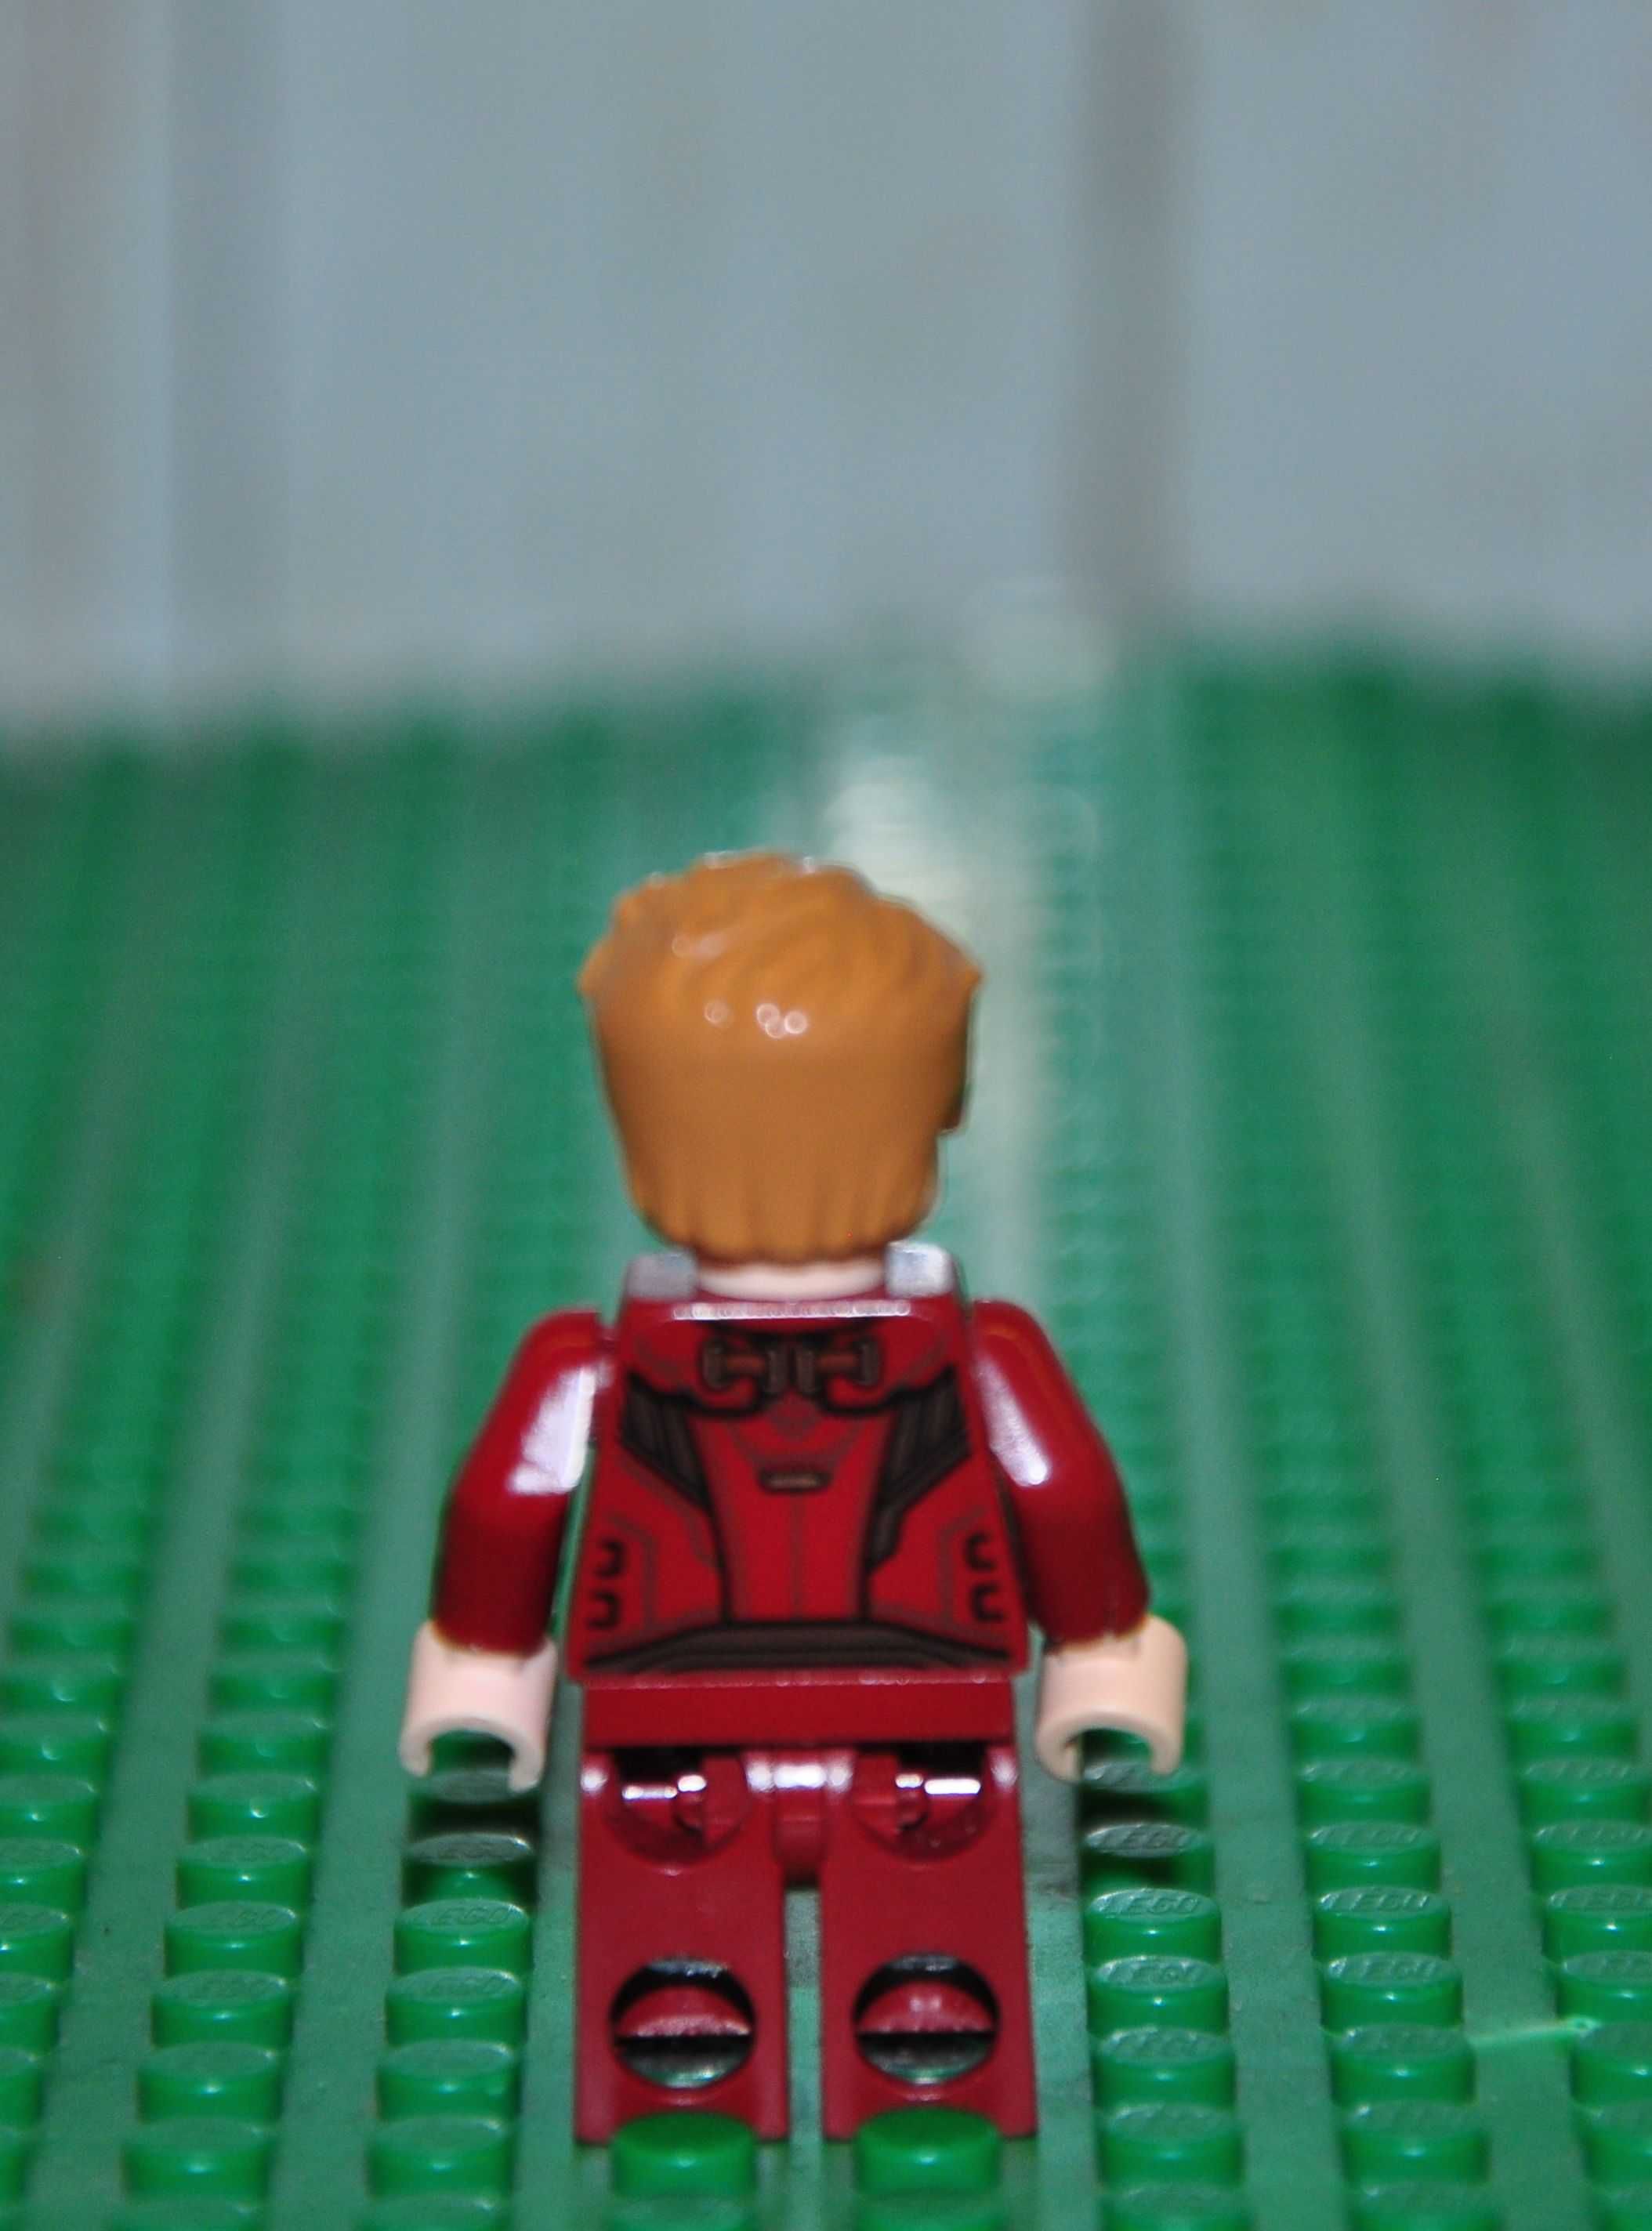 F0452. Figurka LEGO Super Heroes - sh834 Star-Lord